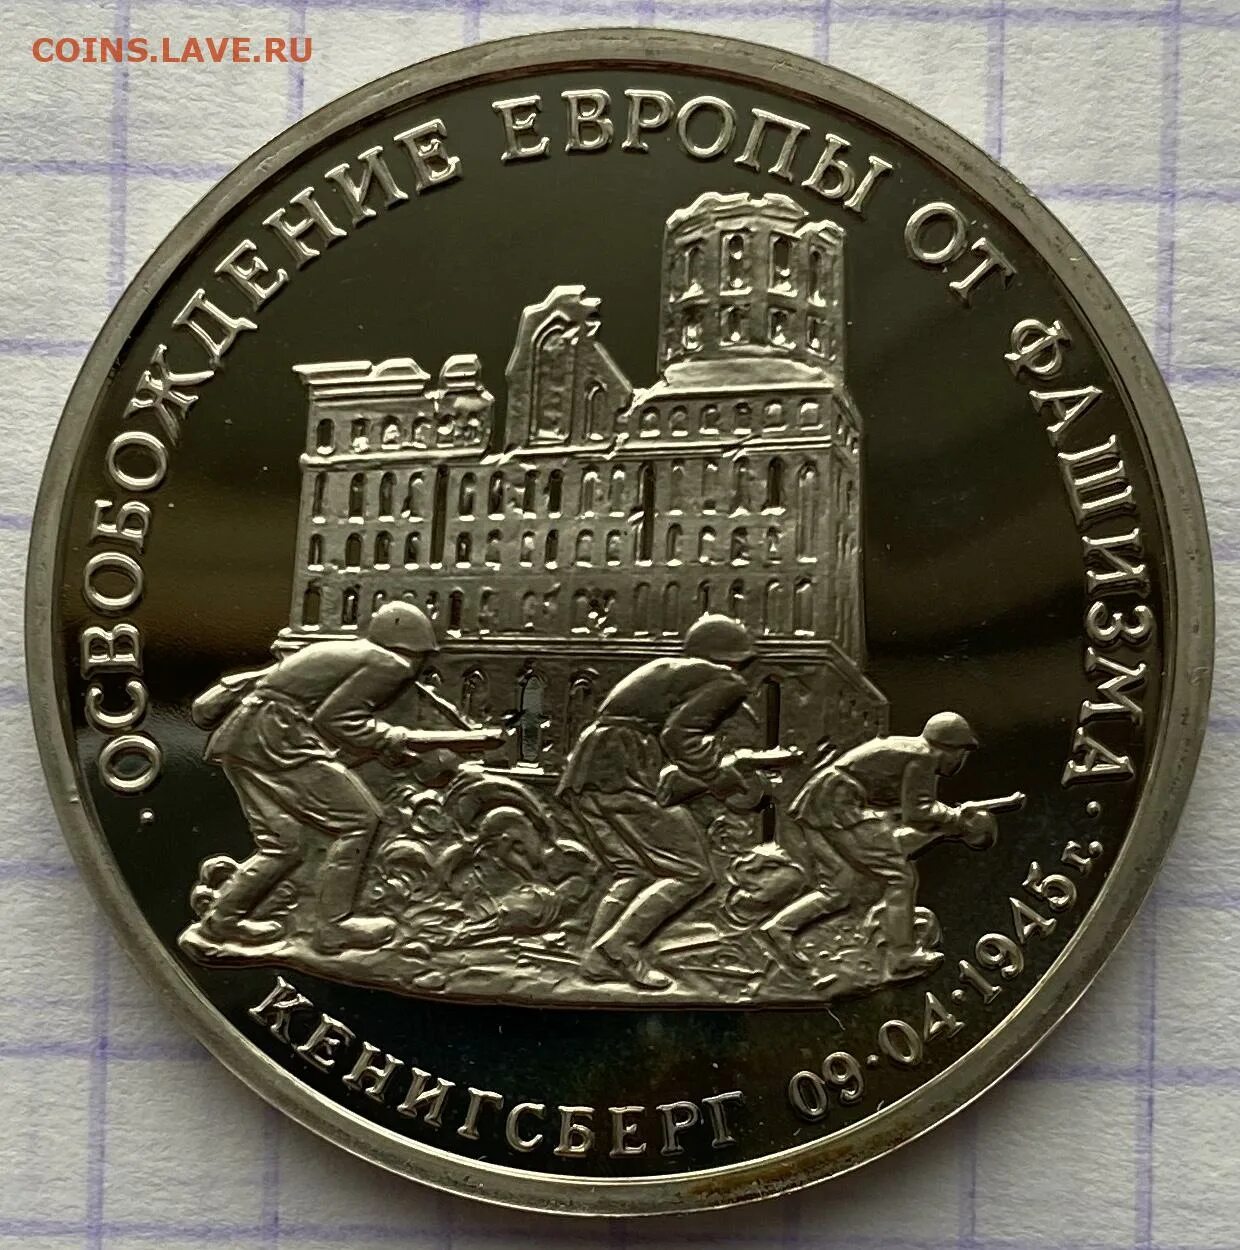 3 рубля 1995 г. Монета Кенигсберг 1995 года. Монеты Кенигсберга. Серебряная монета Кёнигсберг. Кёнигсберга монетысеребреные.